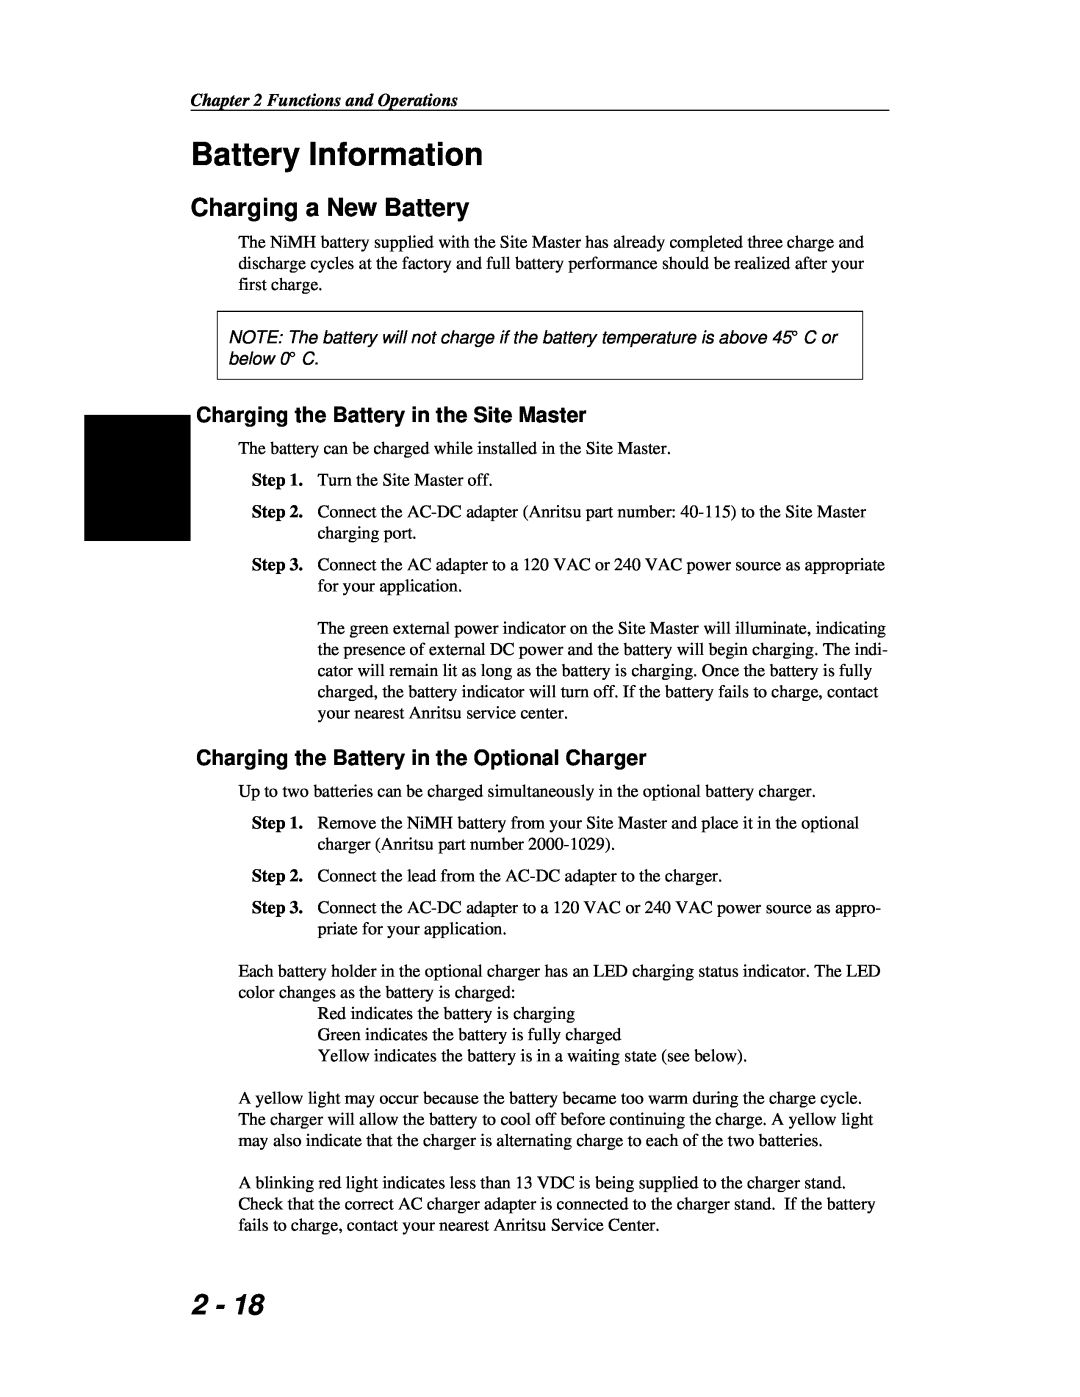 Anritsu S251C manual Battery Information, Charging a New Battery, Charging the Battery in the Site Master 